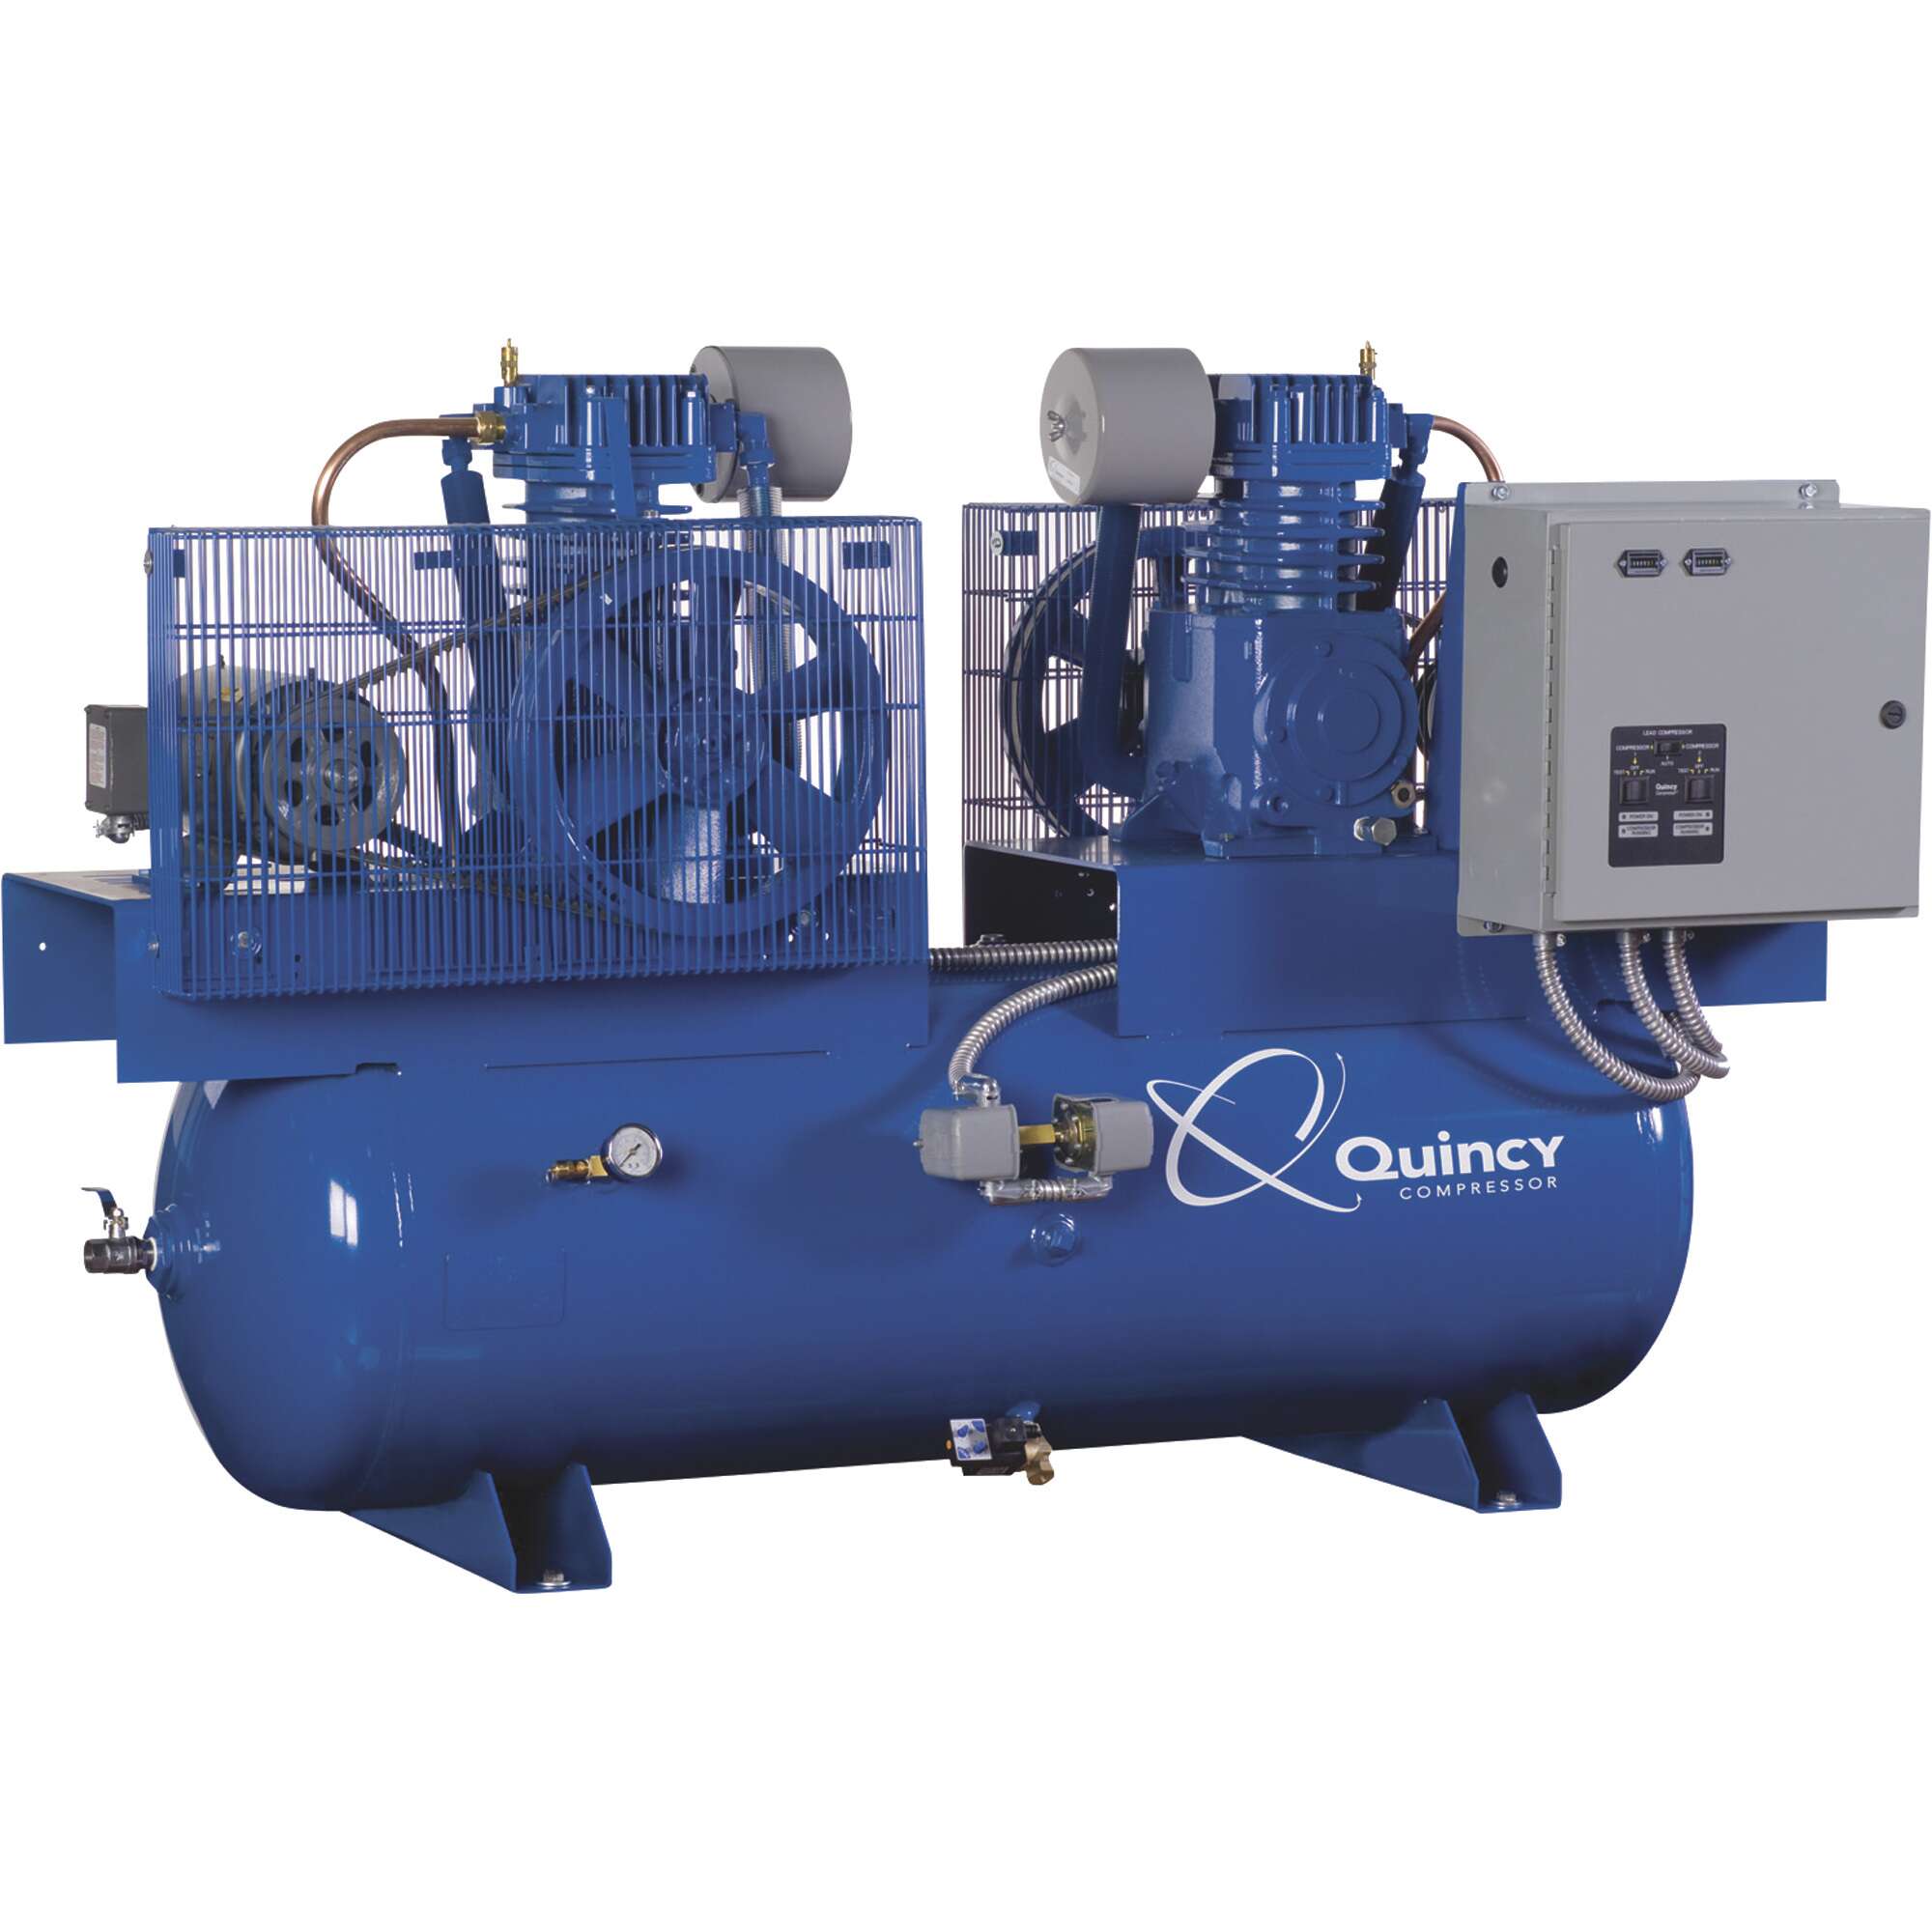 Quincy Duplex Air Compressor 7.5 HP 230 Volt 3 Phase 120 Gallon Horizontal